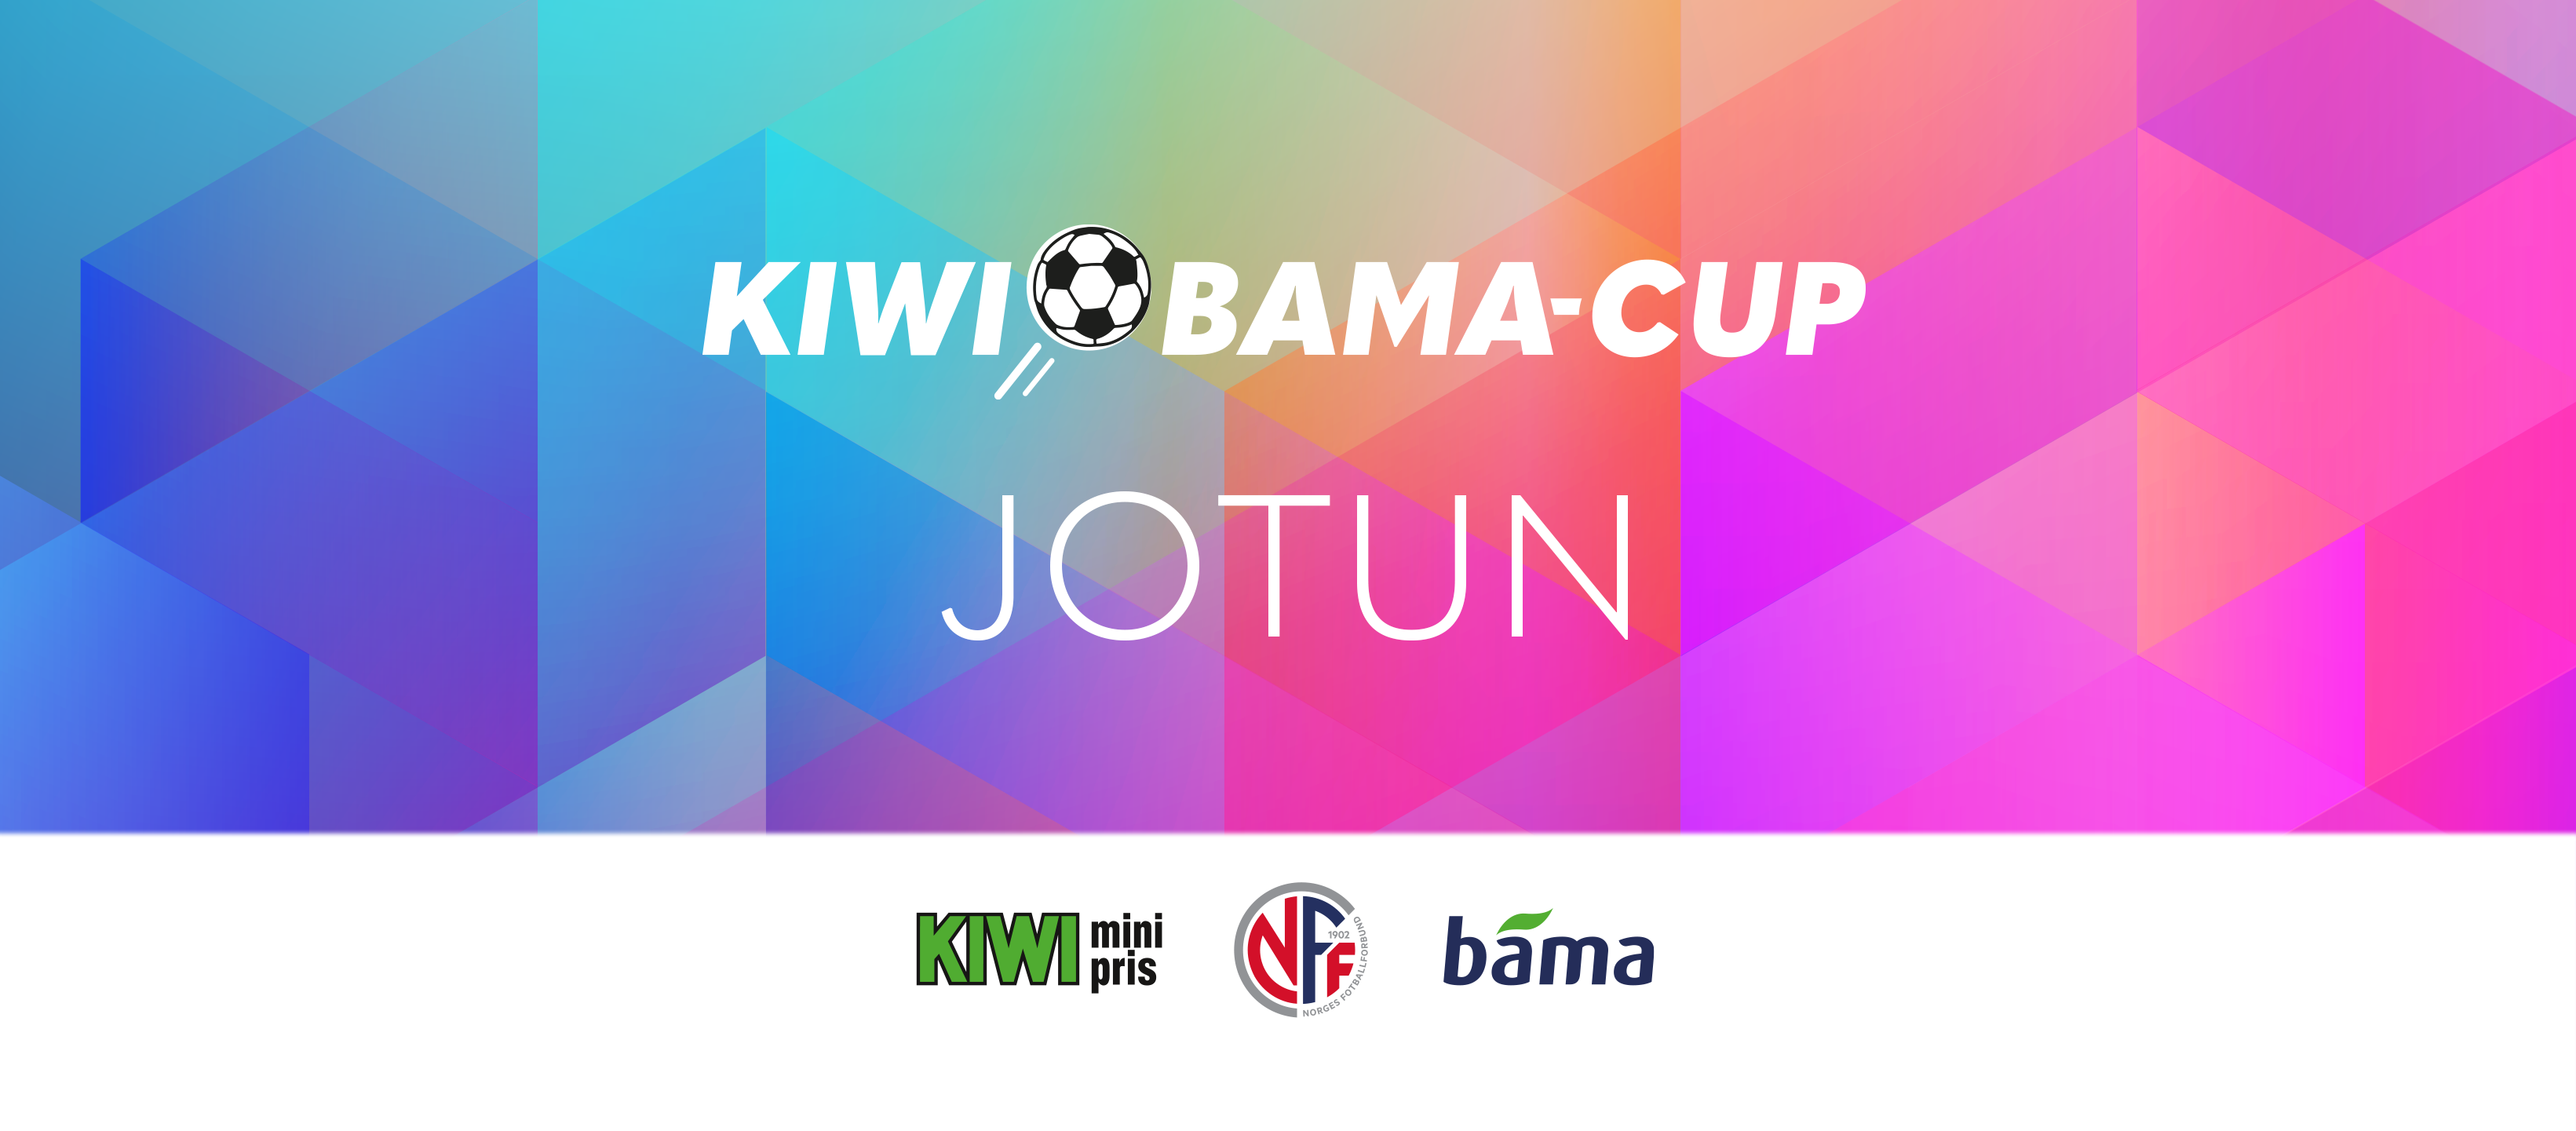 FB-BANNER KIWI-BAMA-Cup - Jotun.png